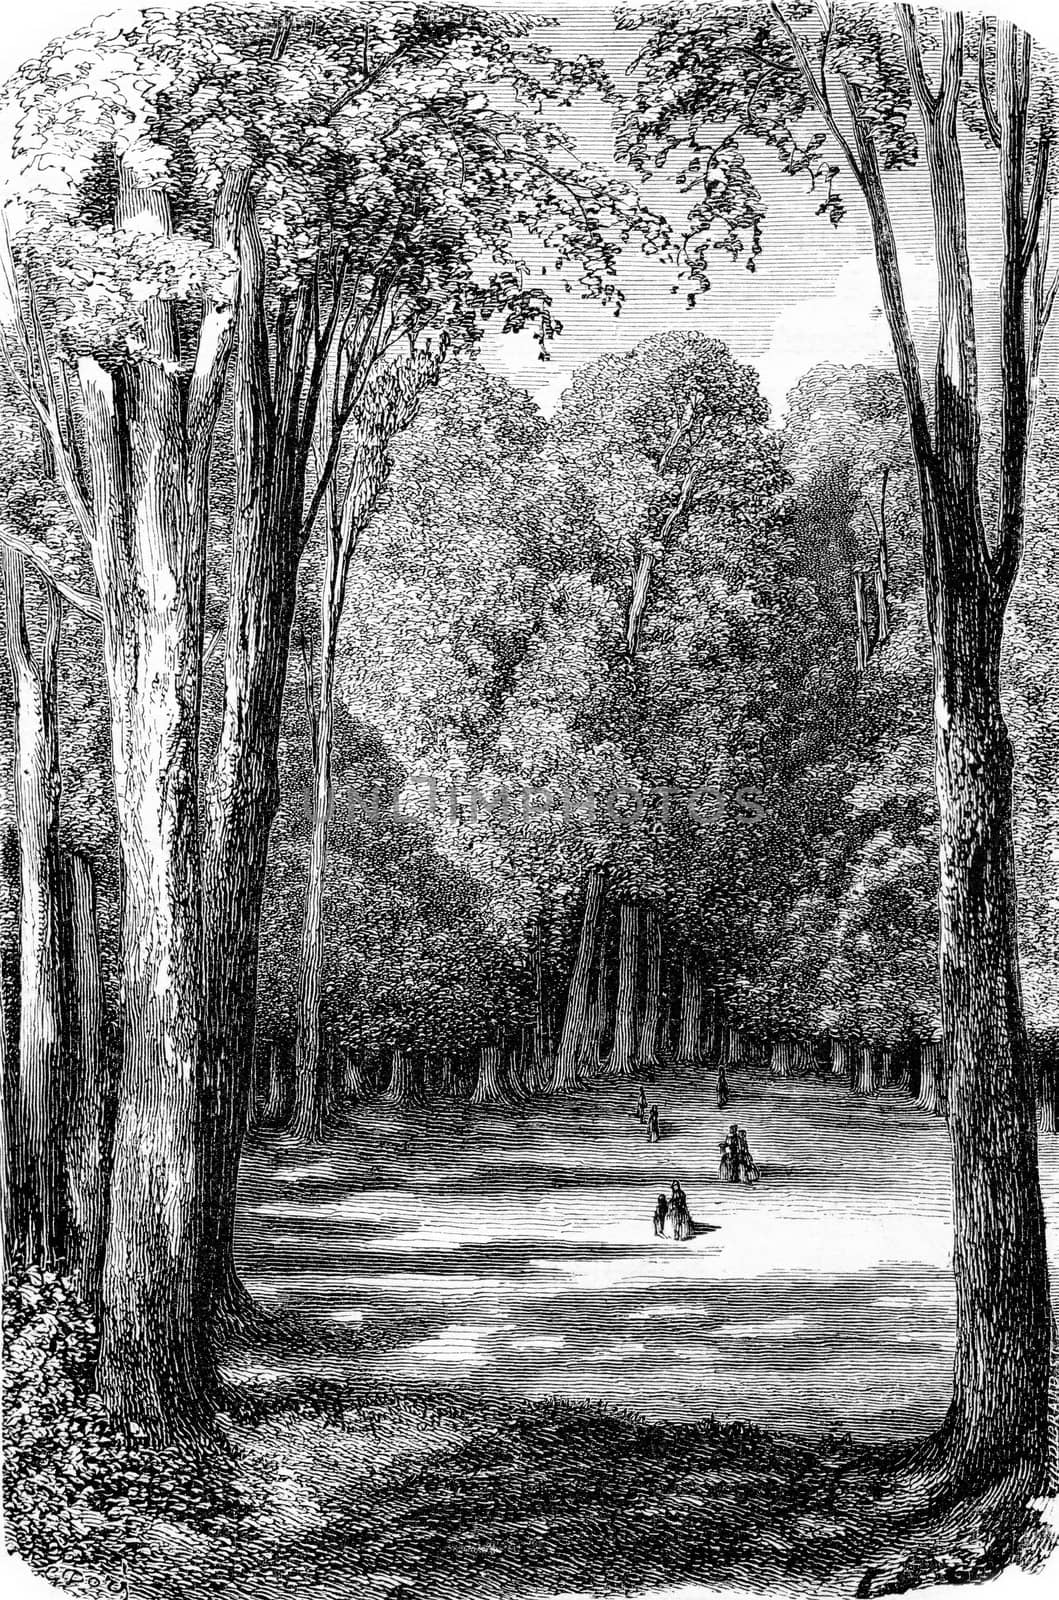 Karlsruhe Park in Karlsruhe, Baden-Württemberg, Germany. From Chemin des Ecoliers, vintage engraving, 1876.
